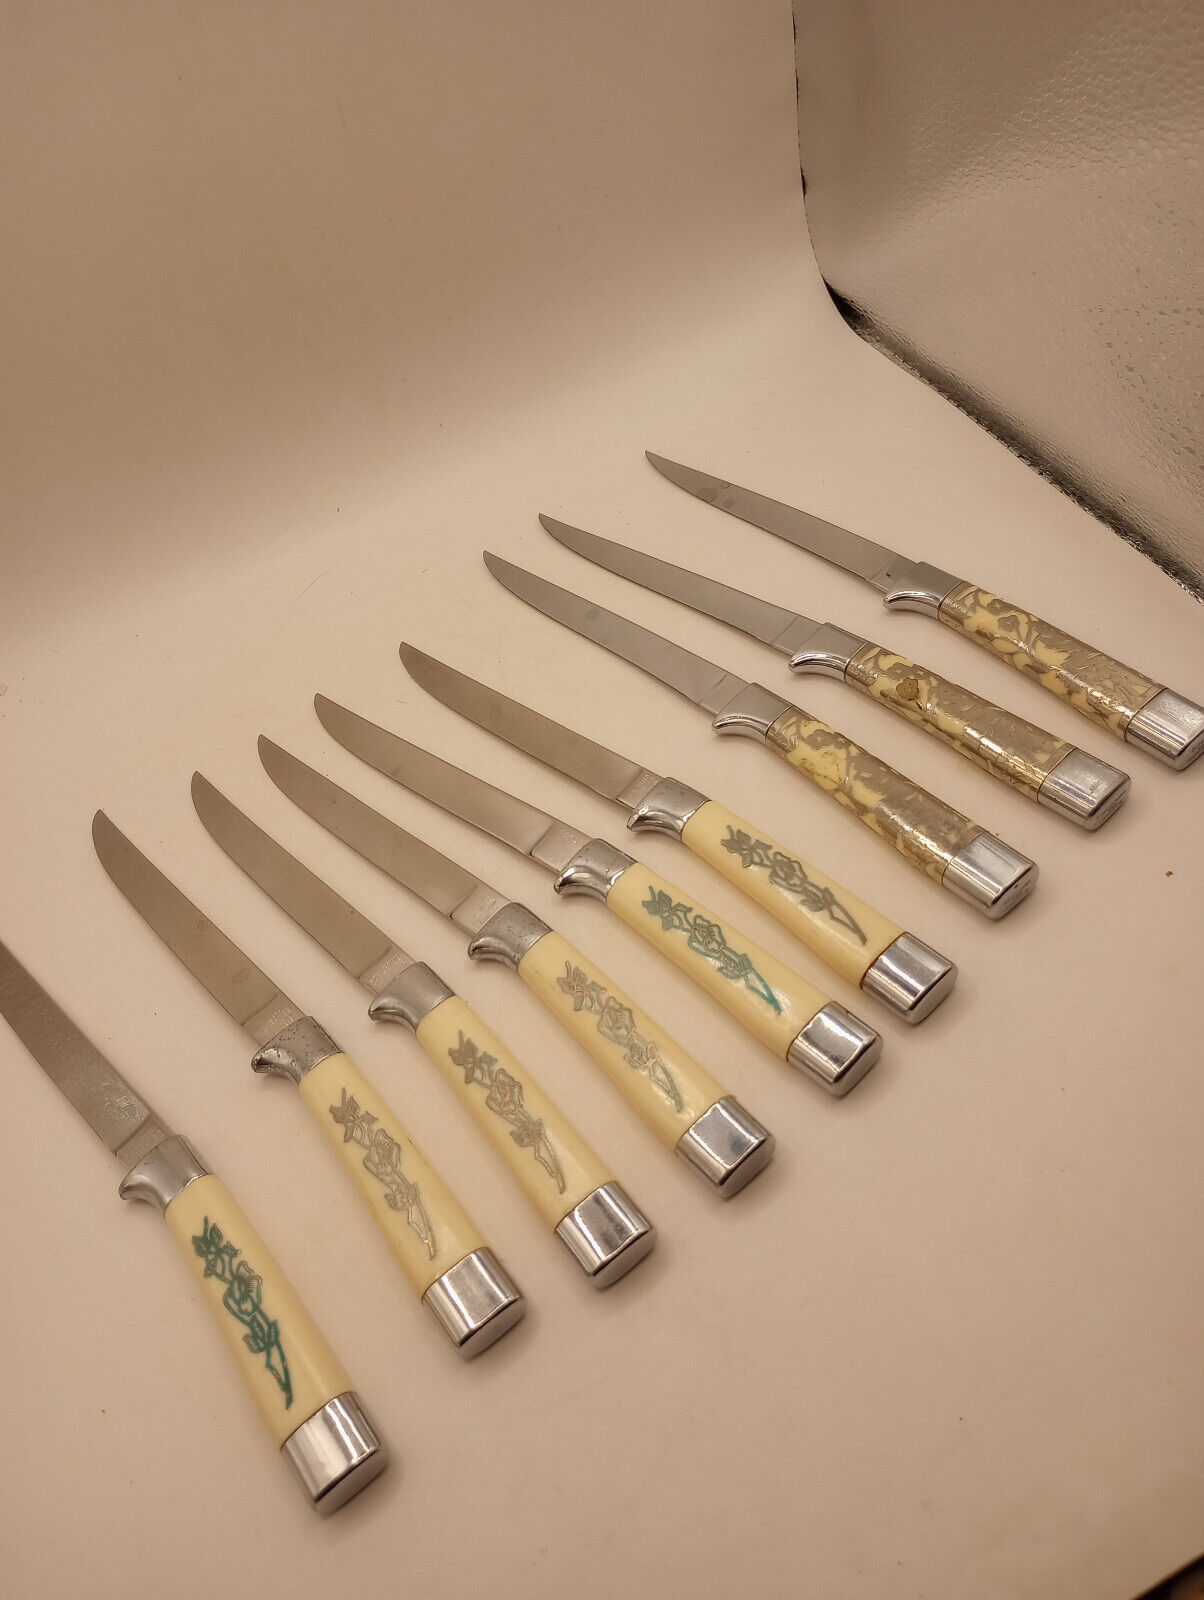 Royal Brand Cutlery Bone Handles Silver Floral Inlay Stainless Steel Vintage